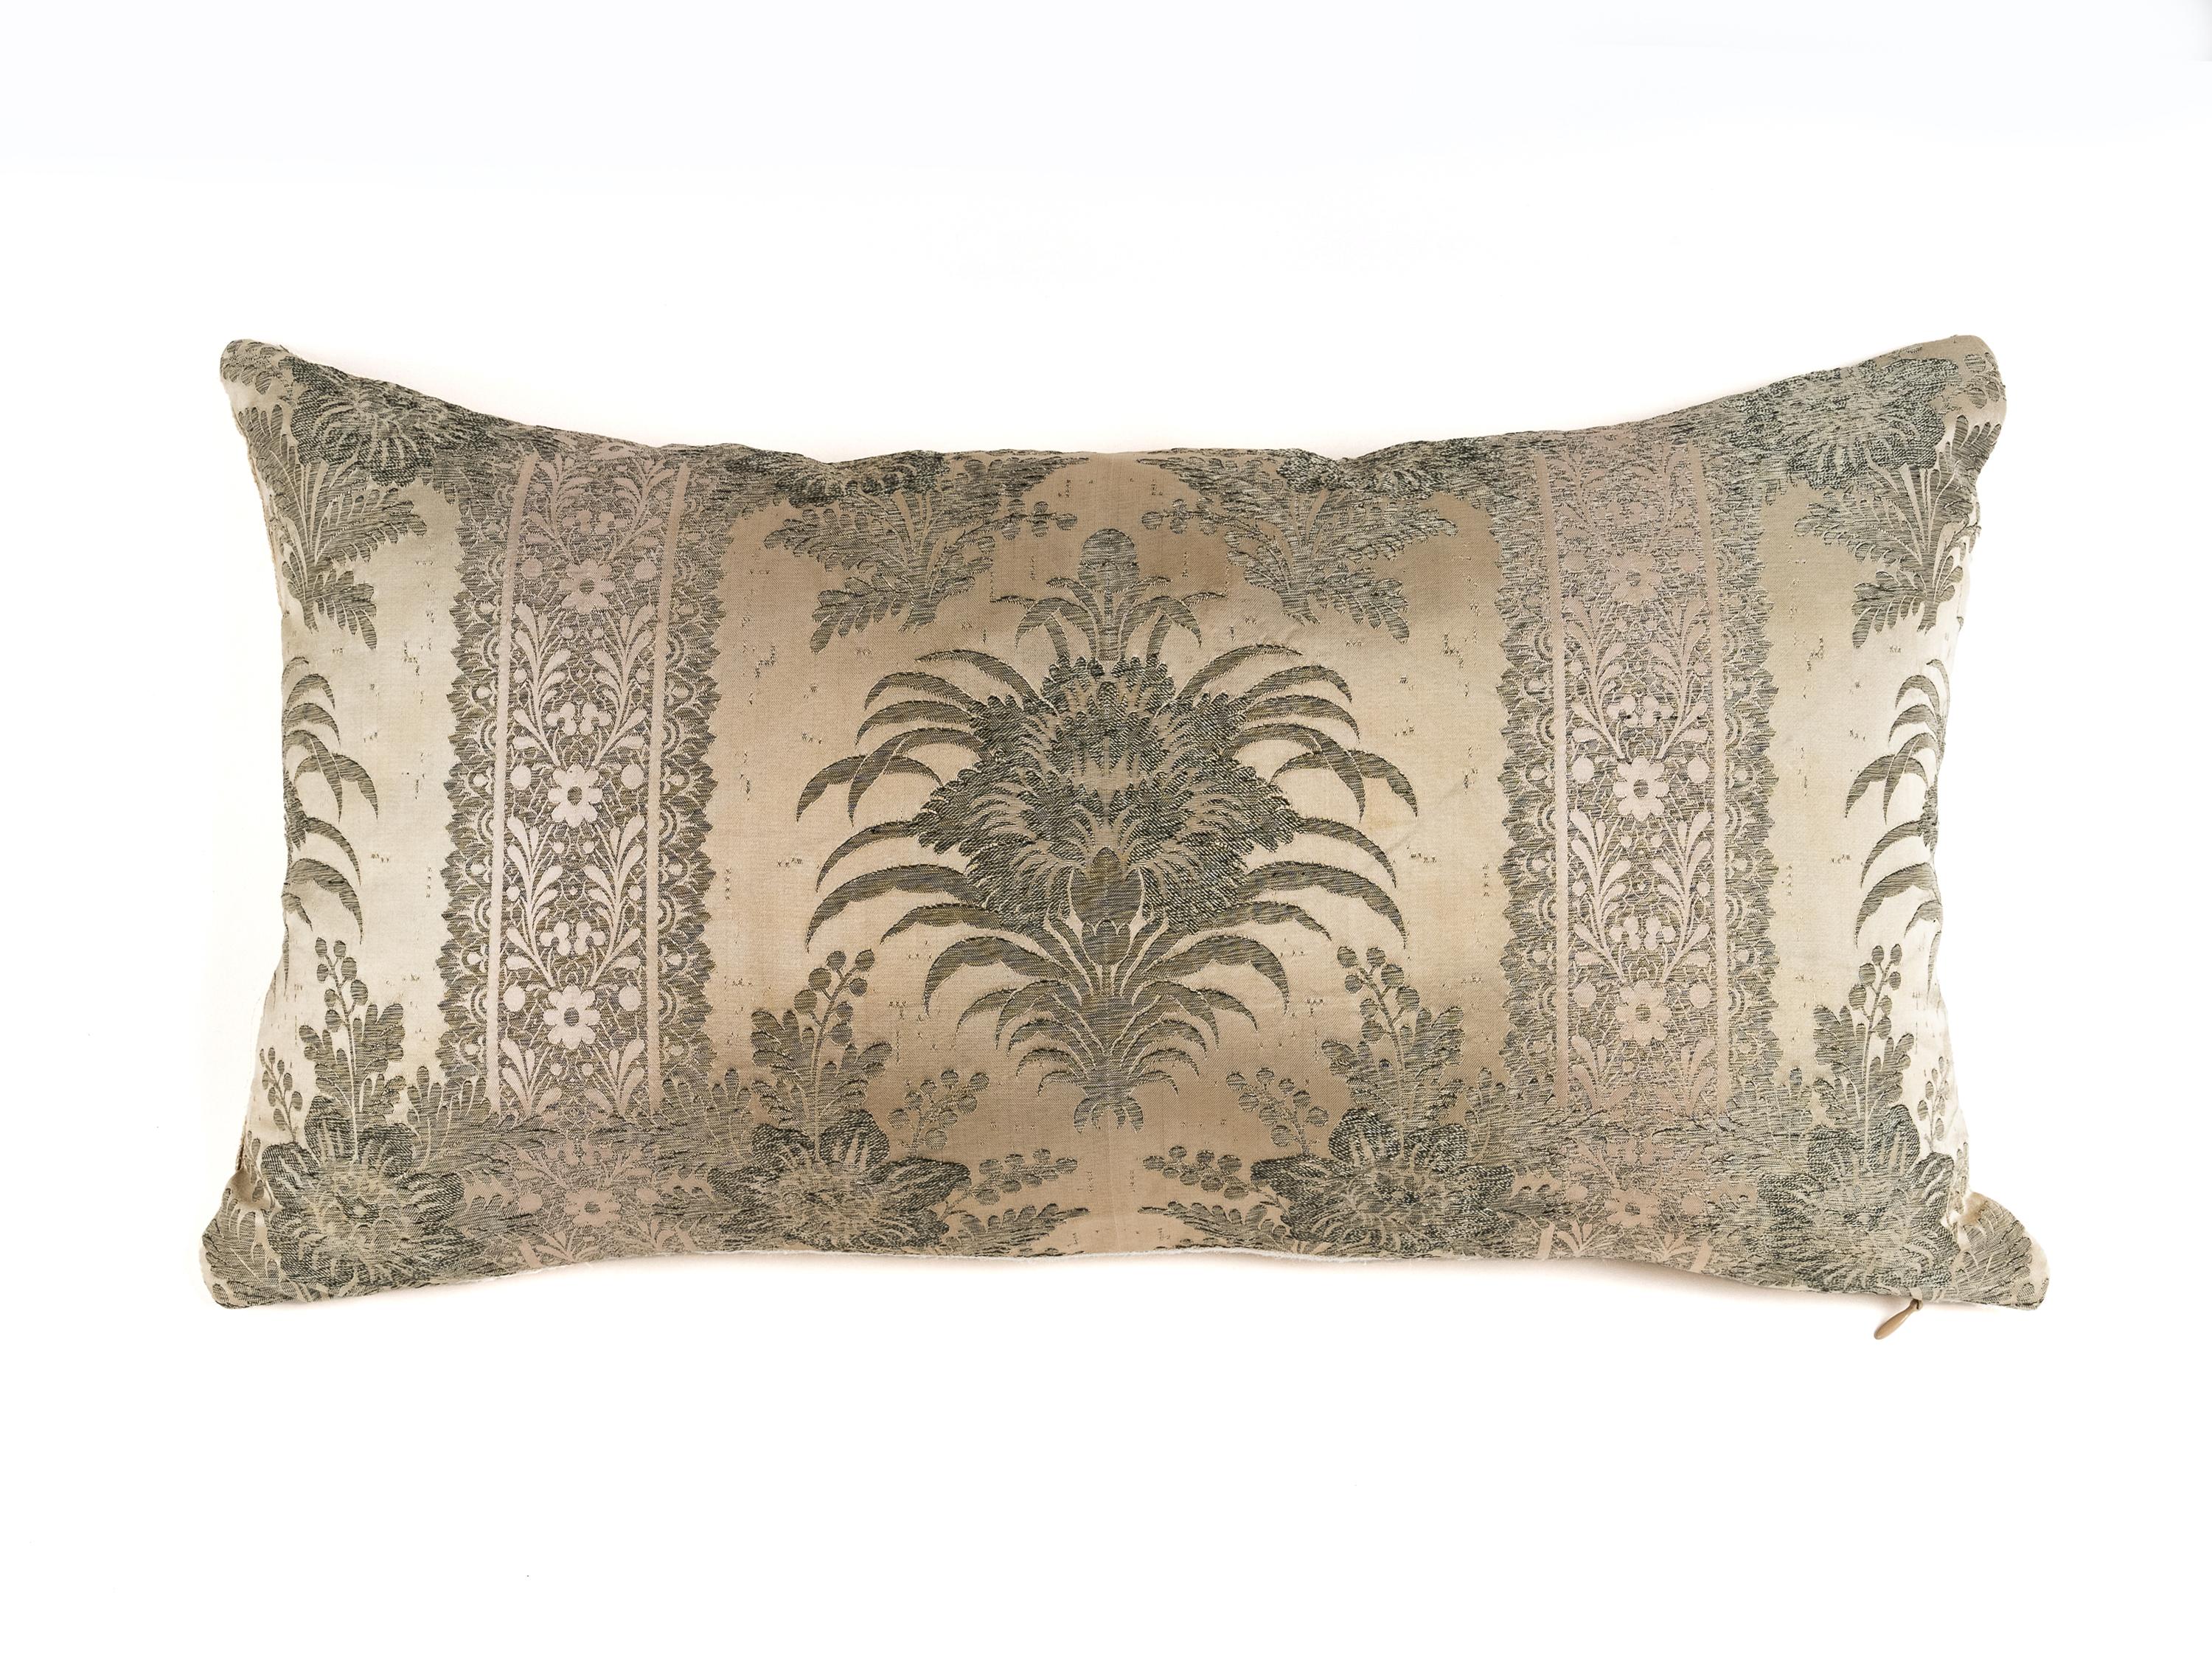 Spanish Set of 4 Decorative Pillows Antique Hemp Linen Vintage Polyester Damask Fabric For Sale